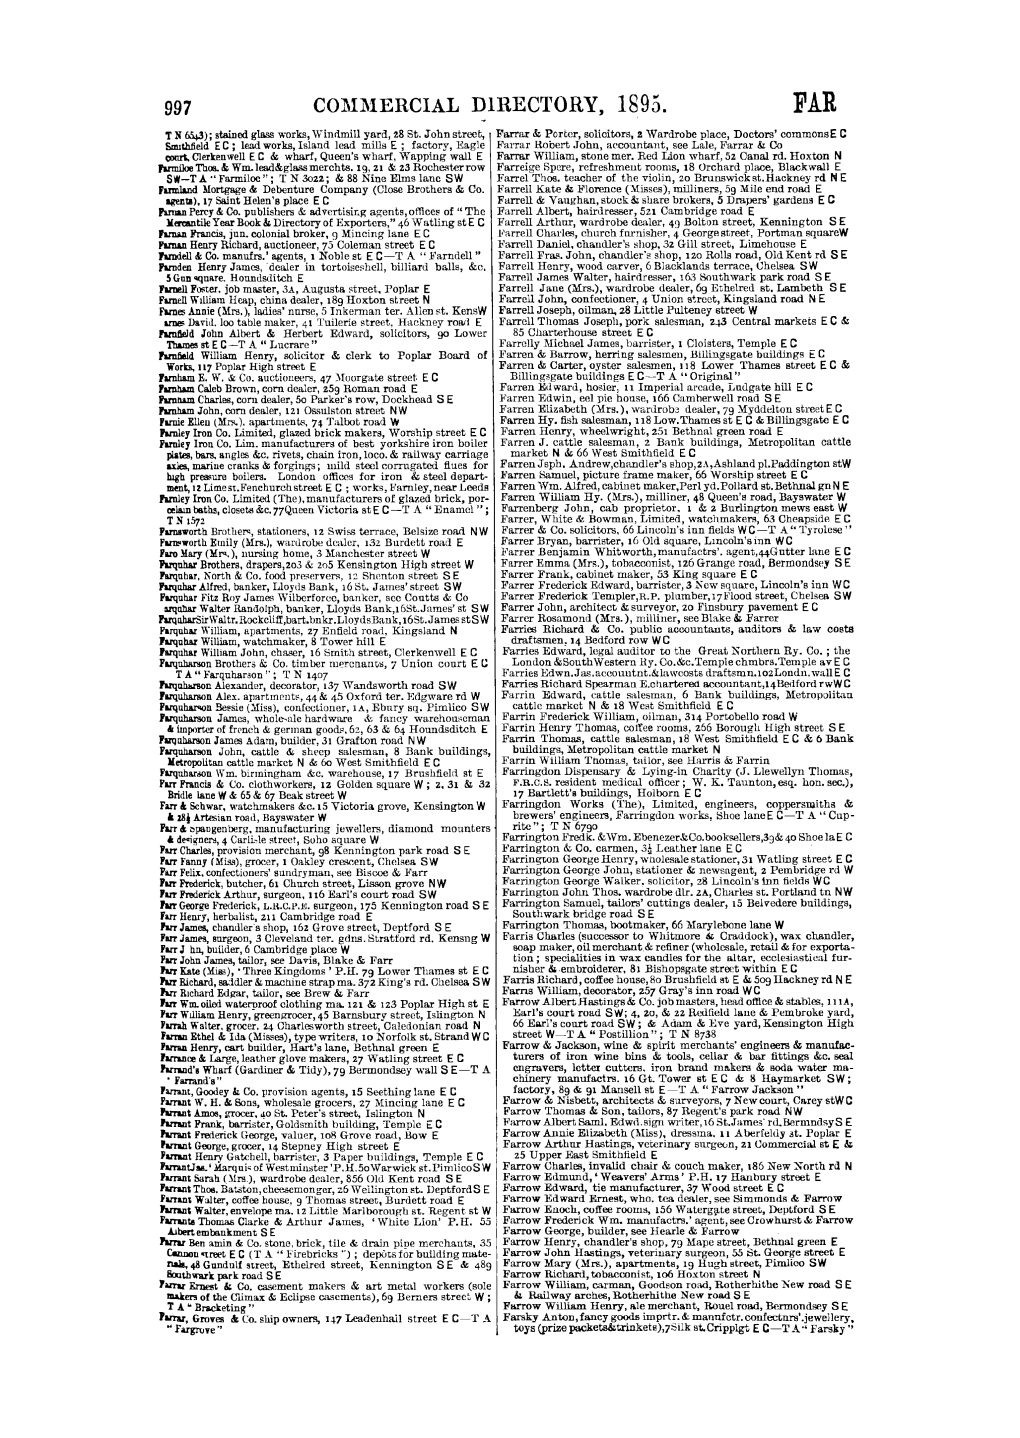 Co~I~1Ercial Directory, 1895. Far